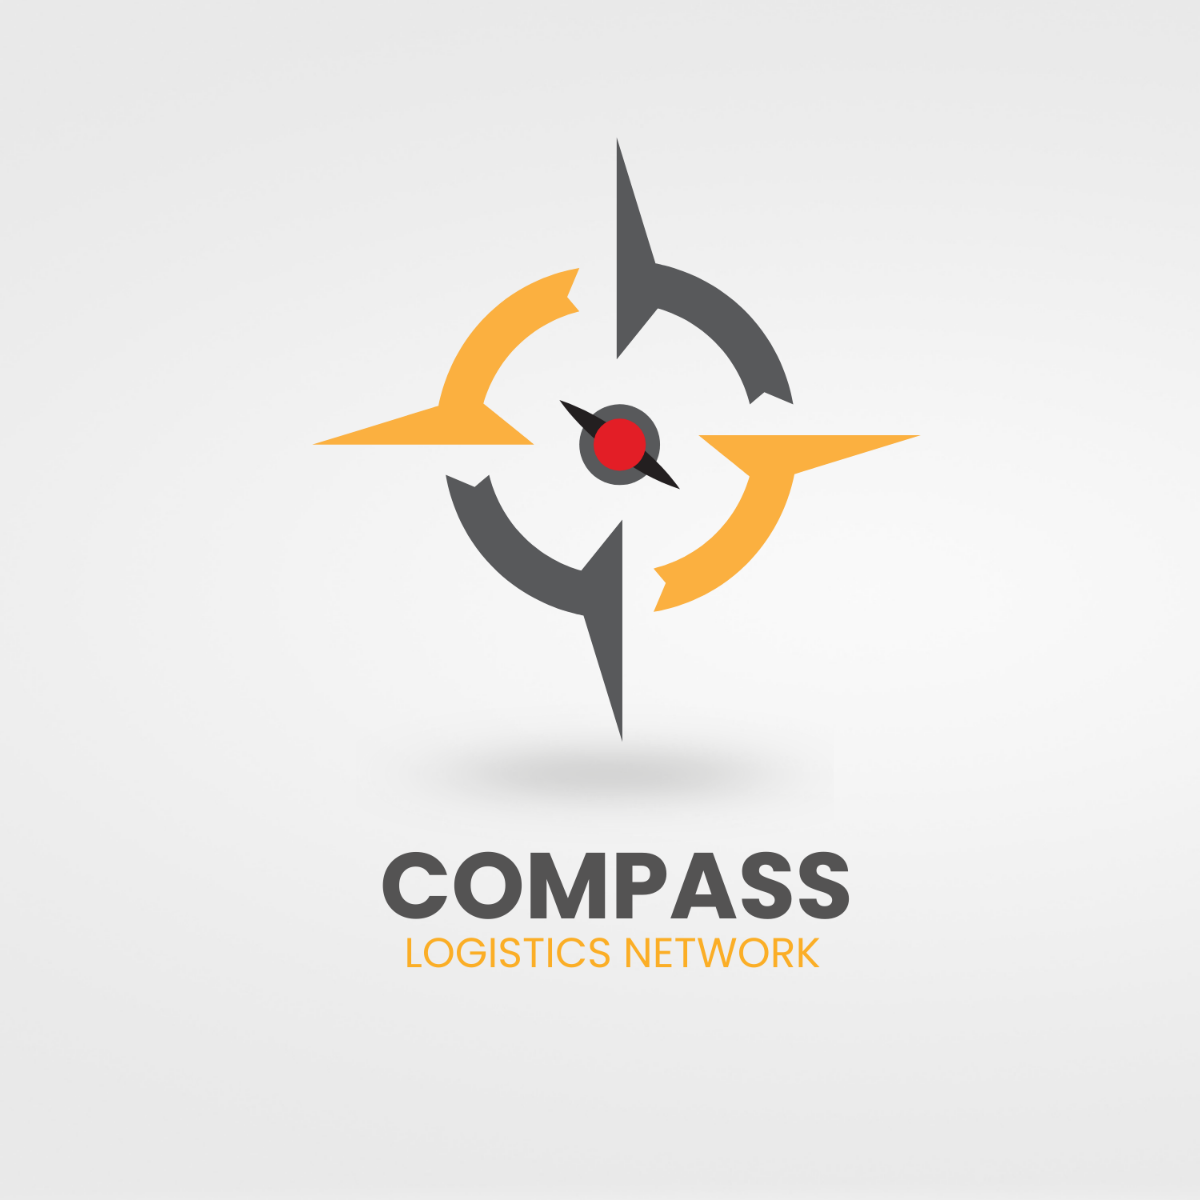 Free Logistics Network Compass Logo Template